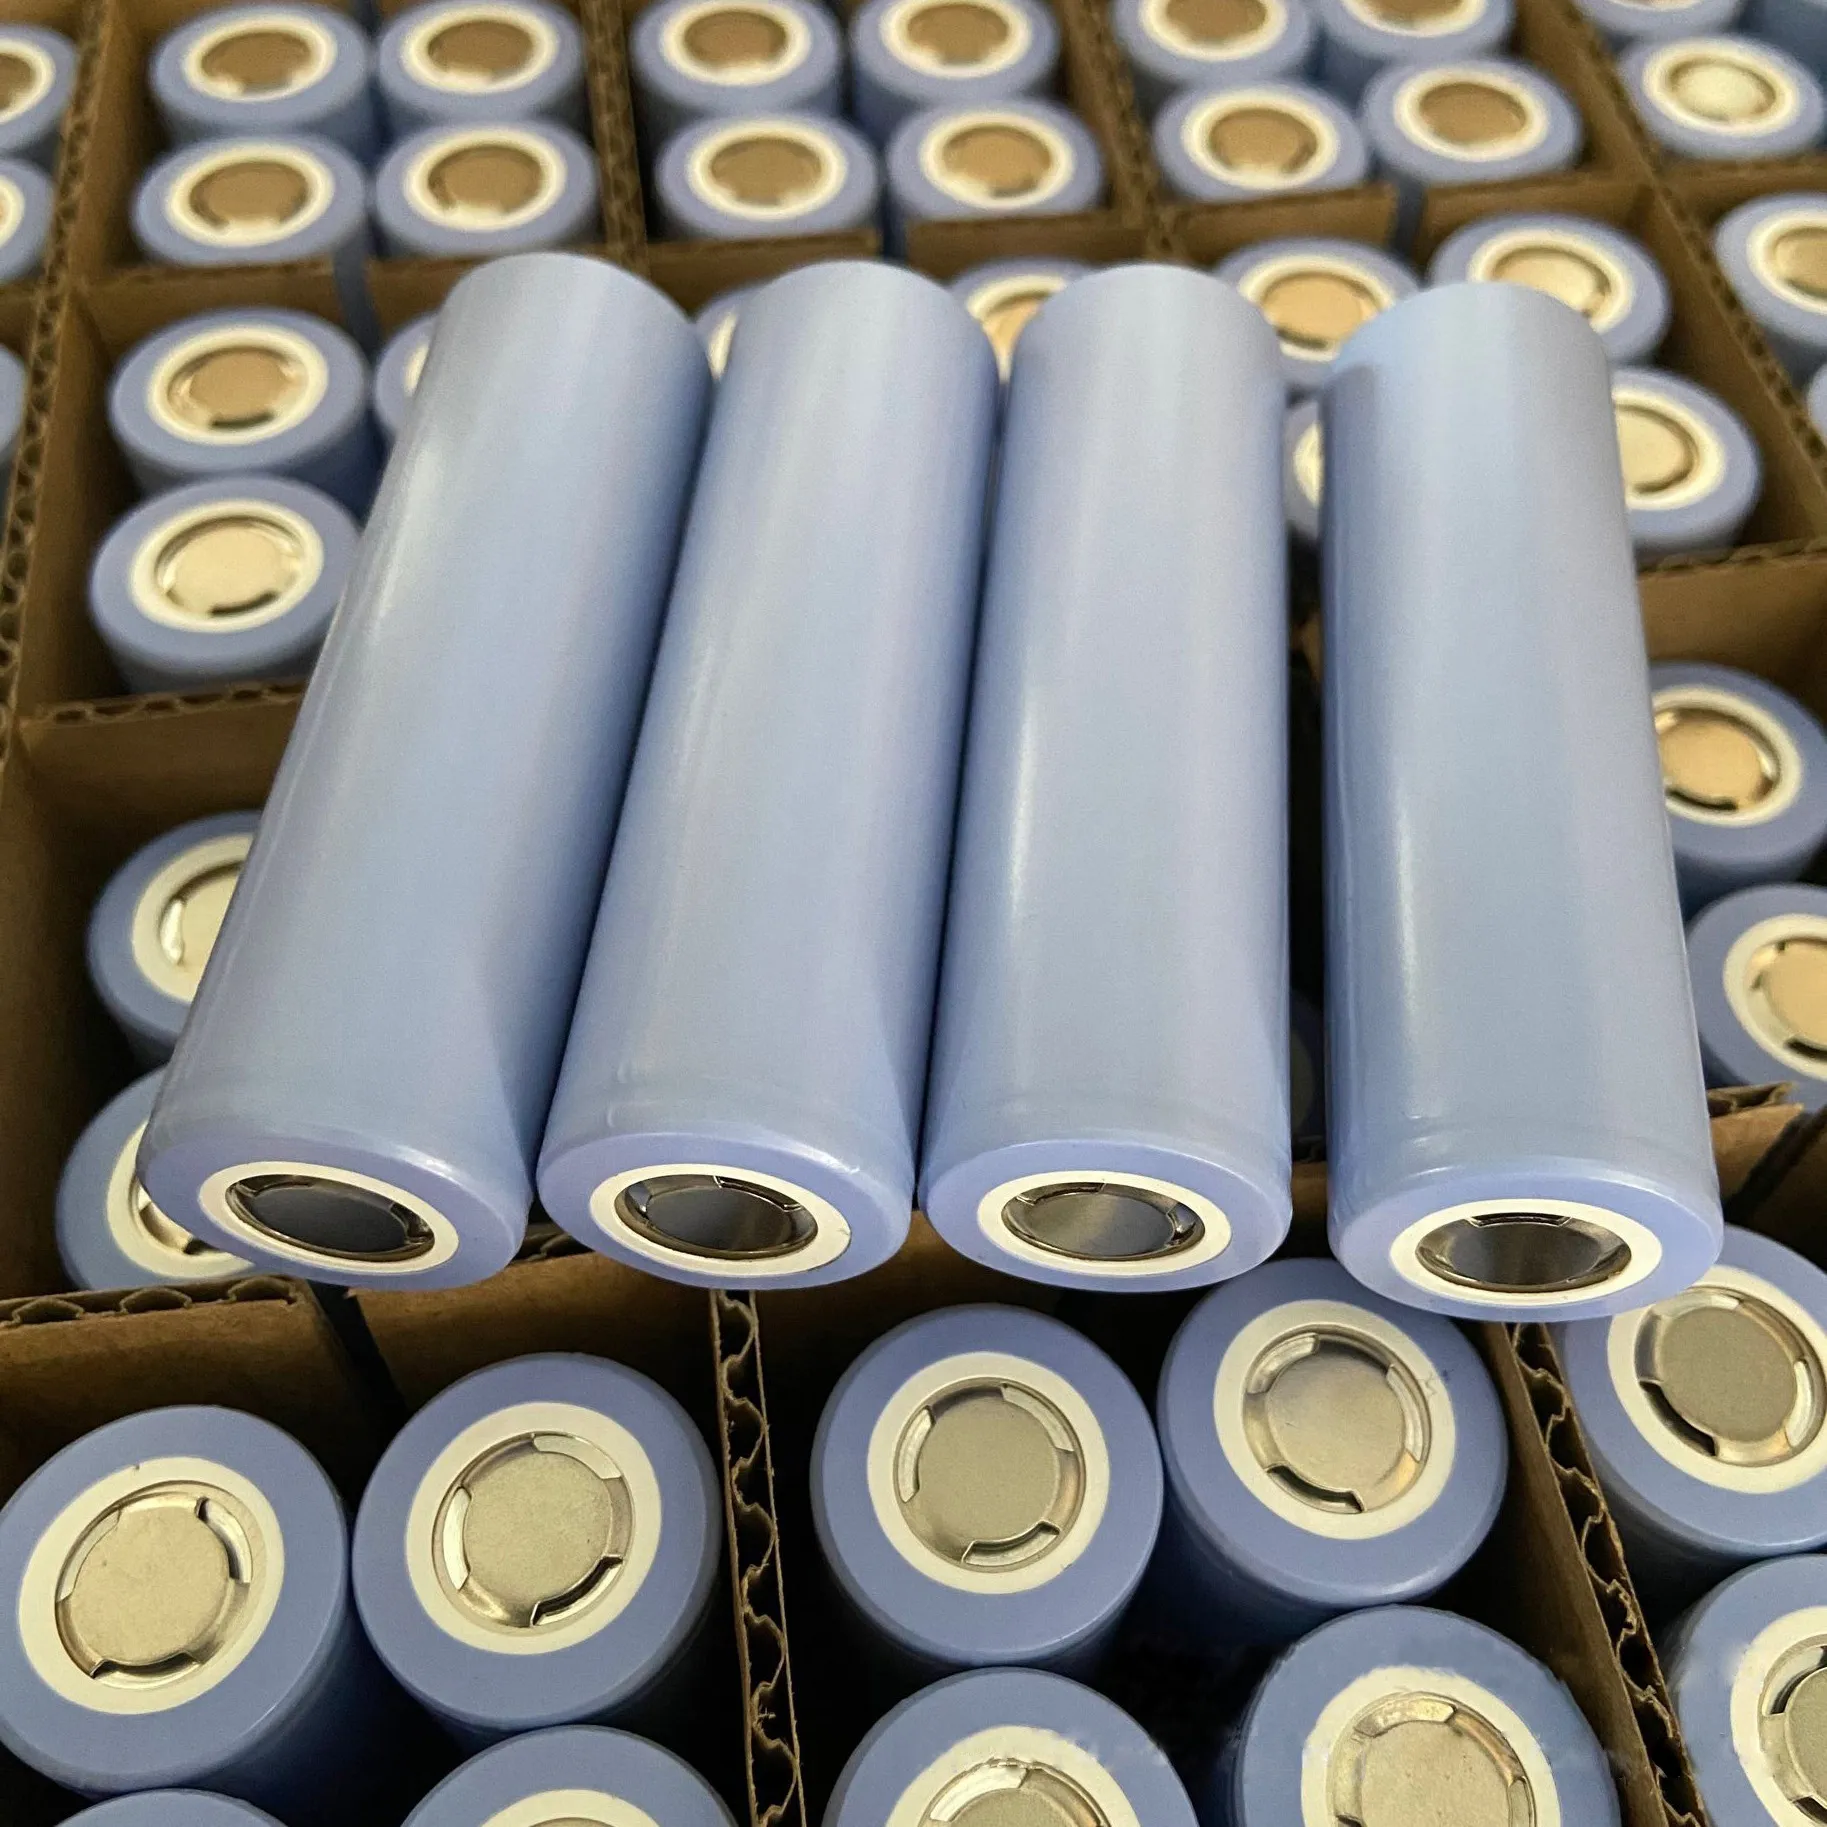 100% Original 21700 Batteriezelle M50T 3,7 V 5000 MAH 15A Hochleistungsentladungs-Akkus für Elektrowerkzeuge Fahrrad